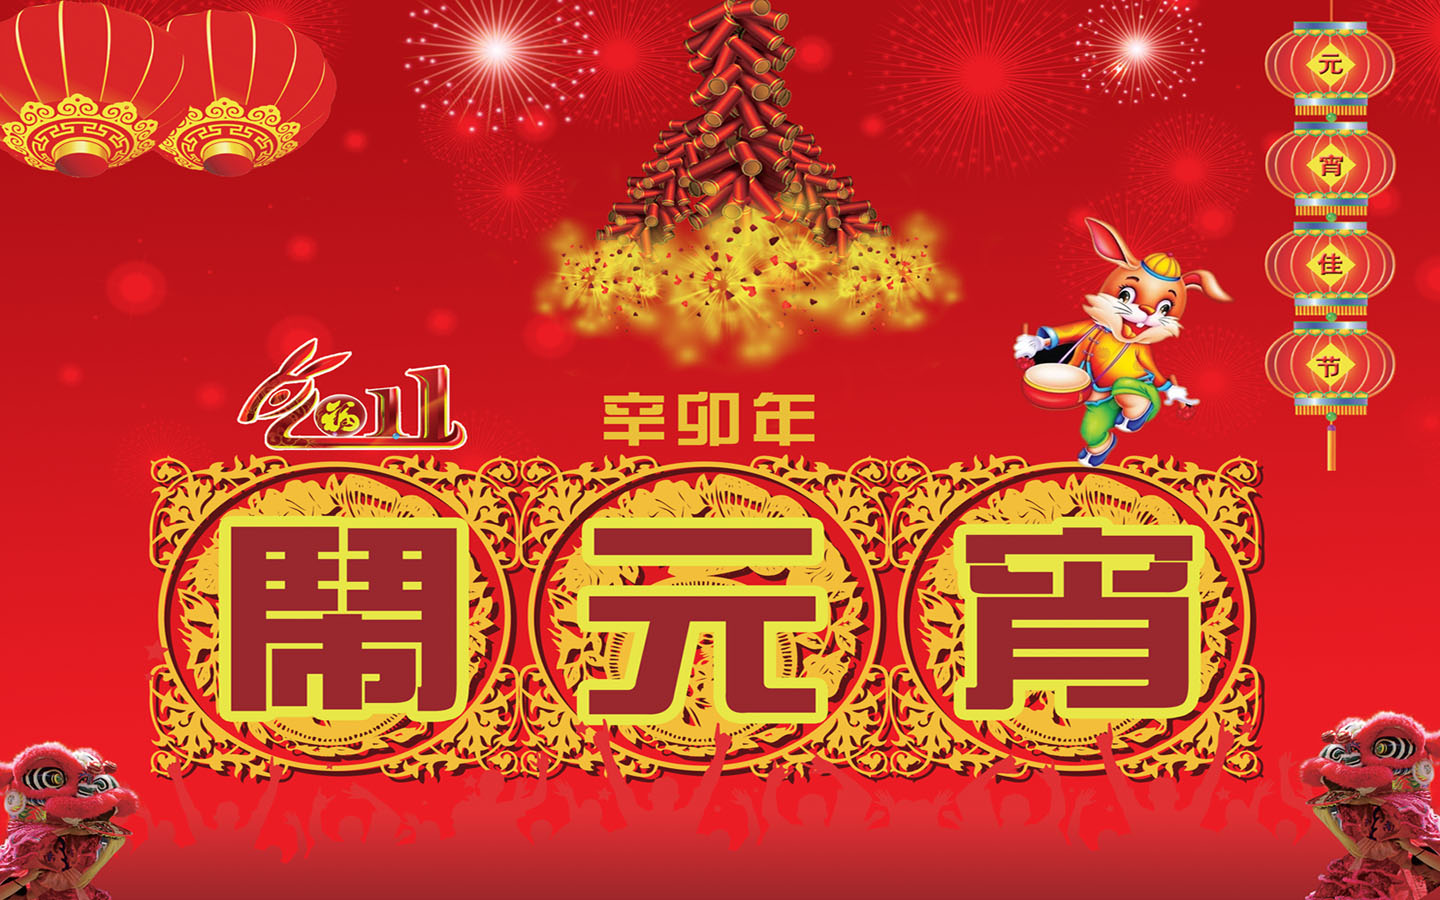 Red Celebrating Lantern Festival Wallpaper for the Year of the Rabbit